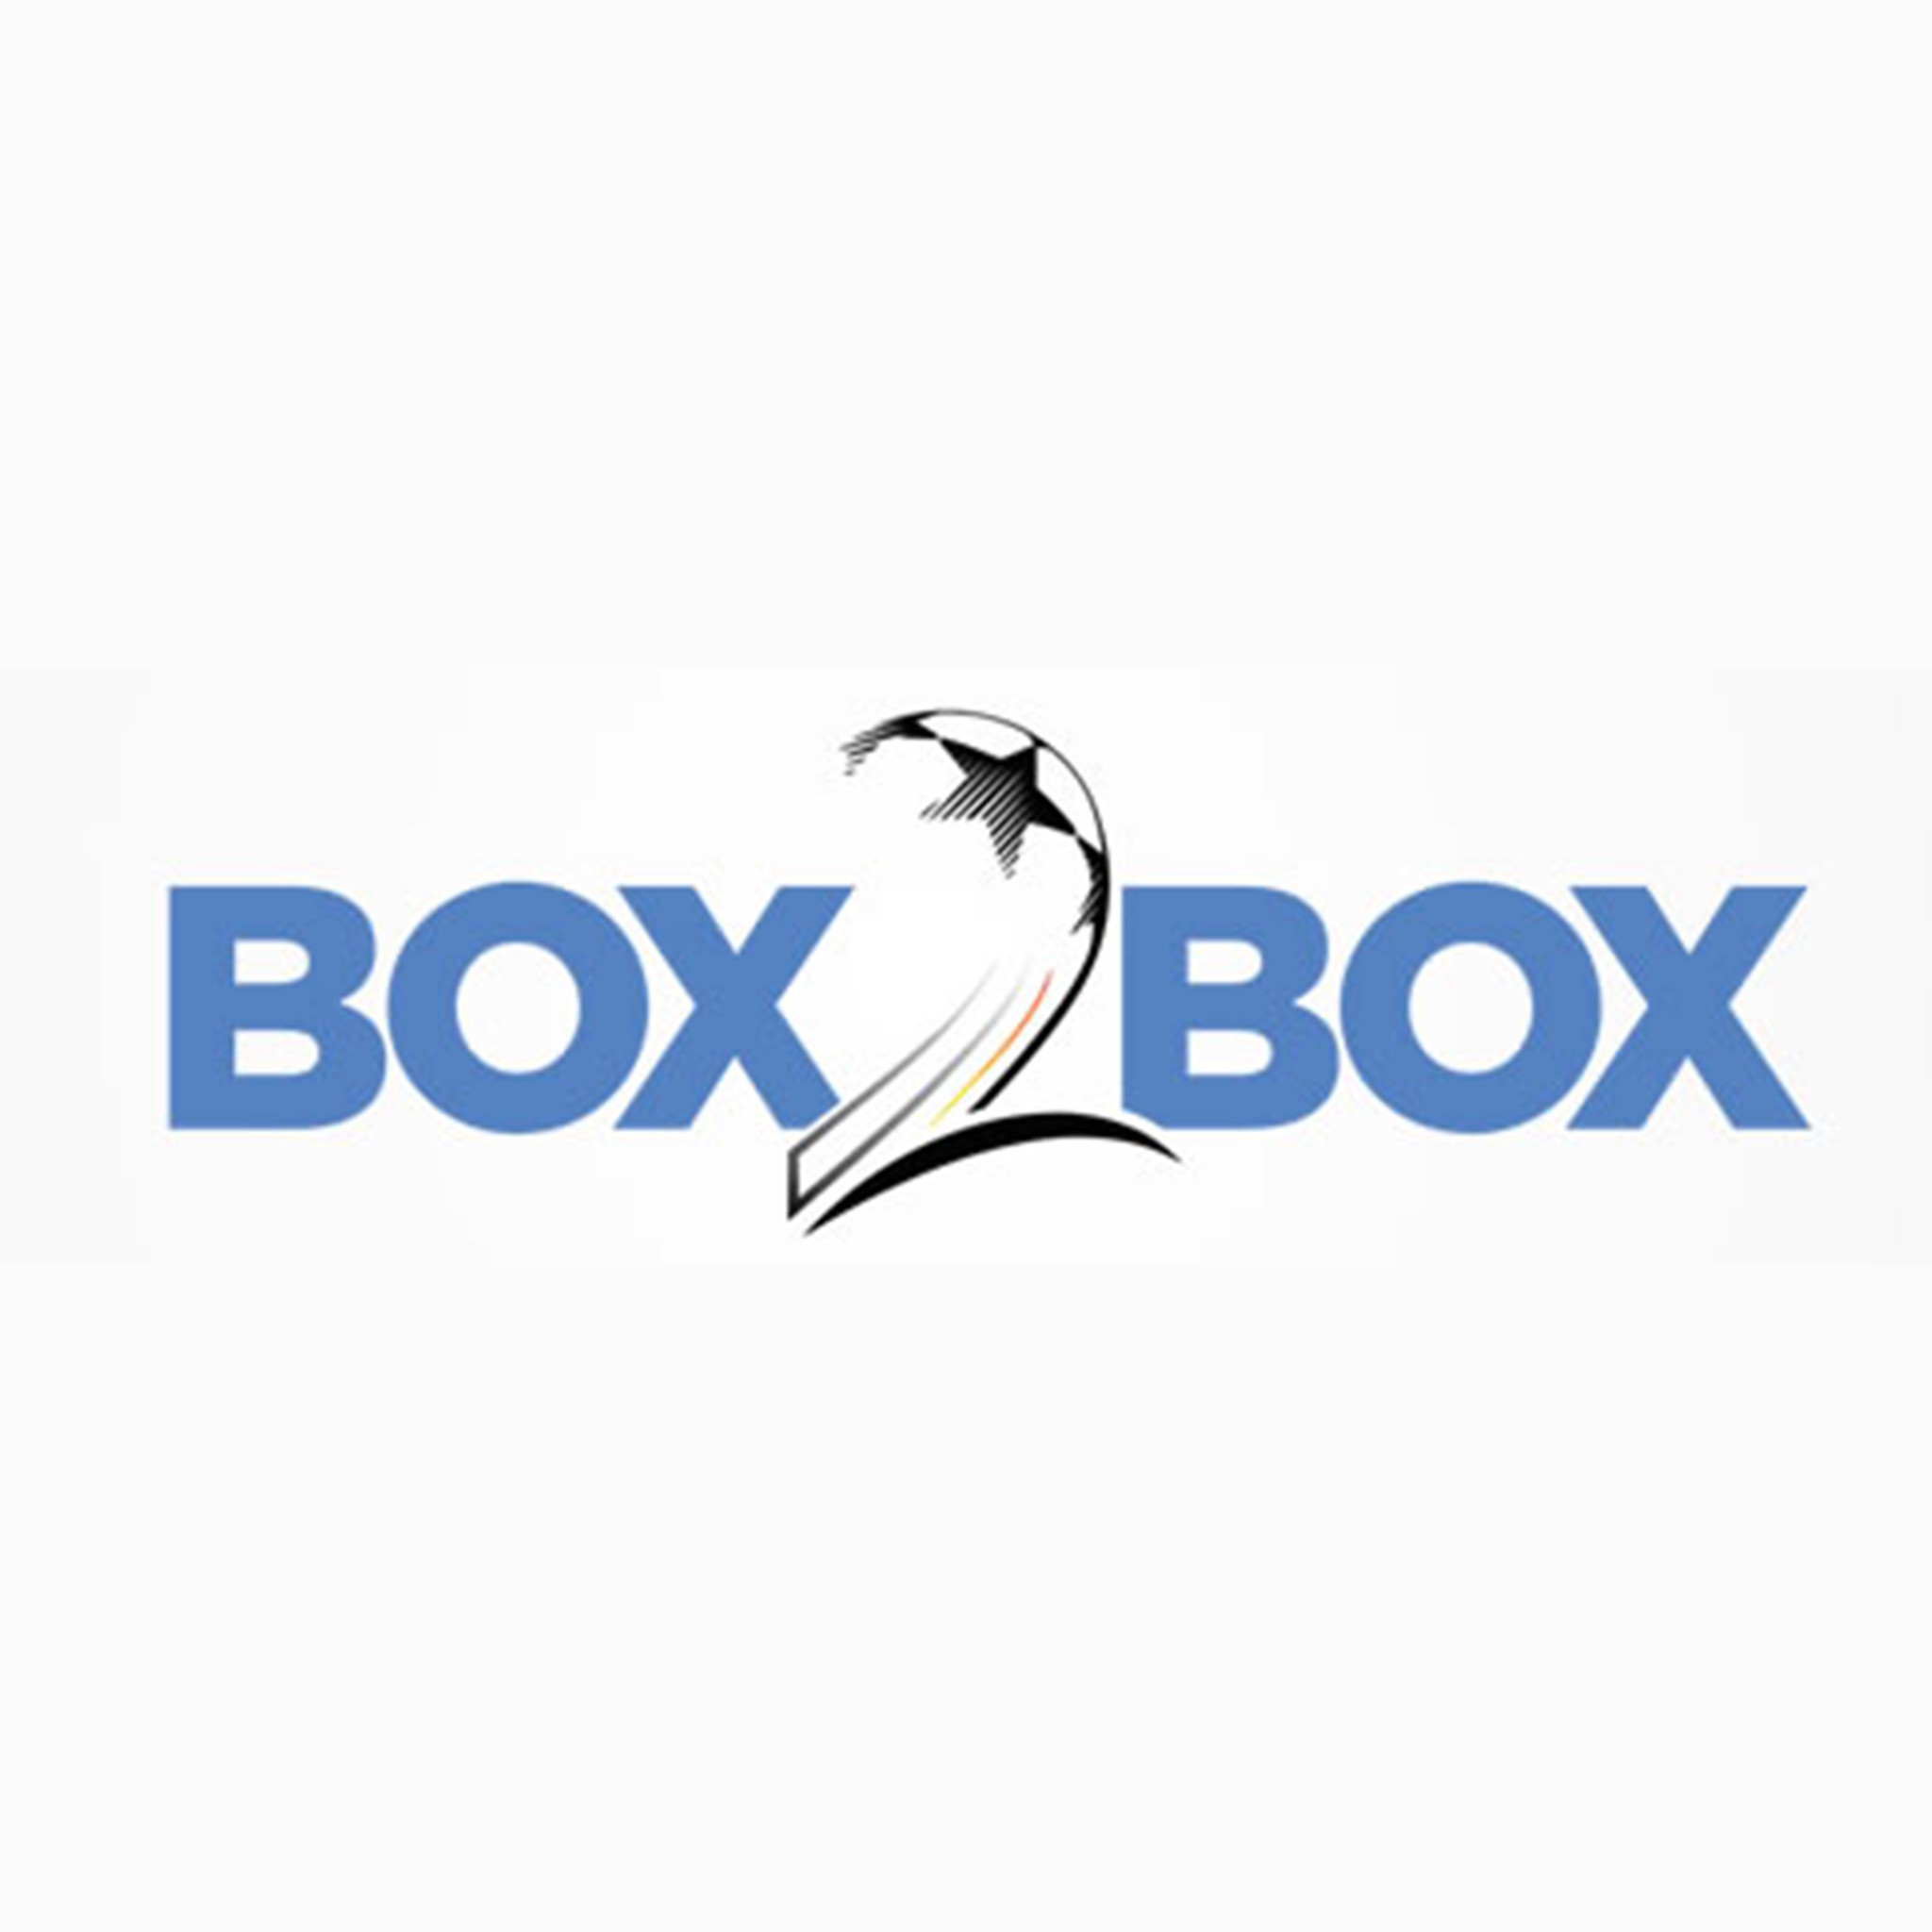 Perth Glory CEO Anthony Radich hails Pelligra Group ownership - Box2Box